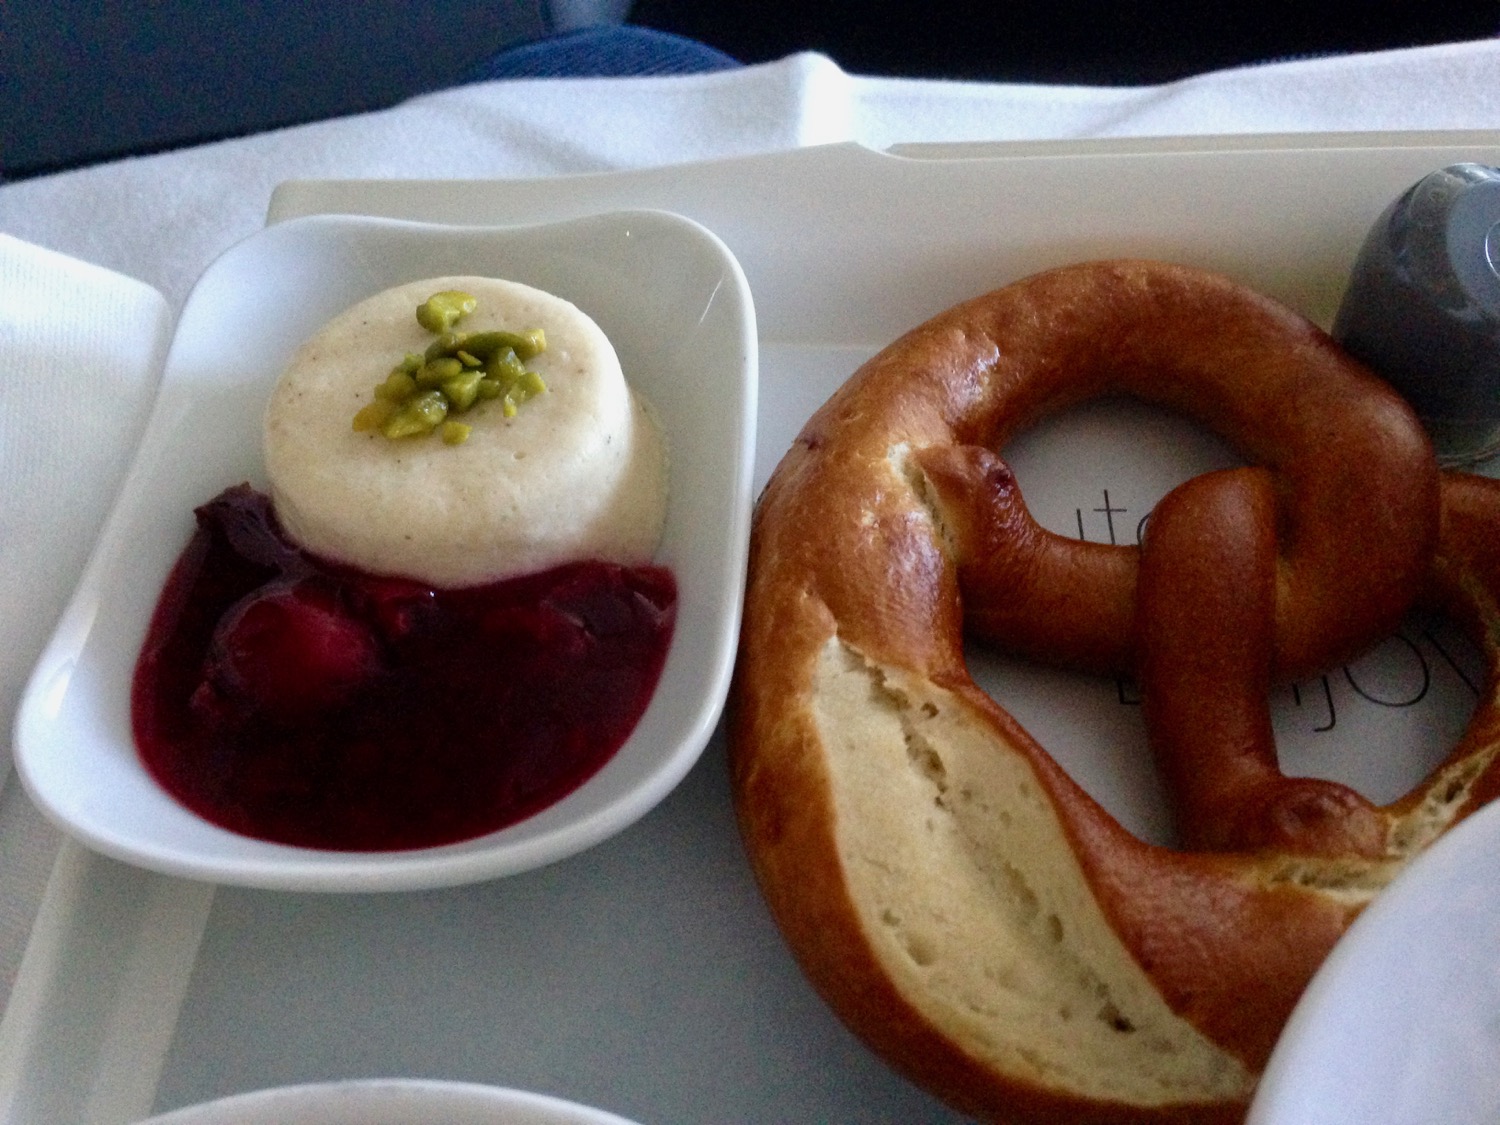 a pretzel and dessert on a tray